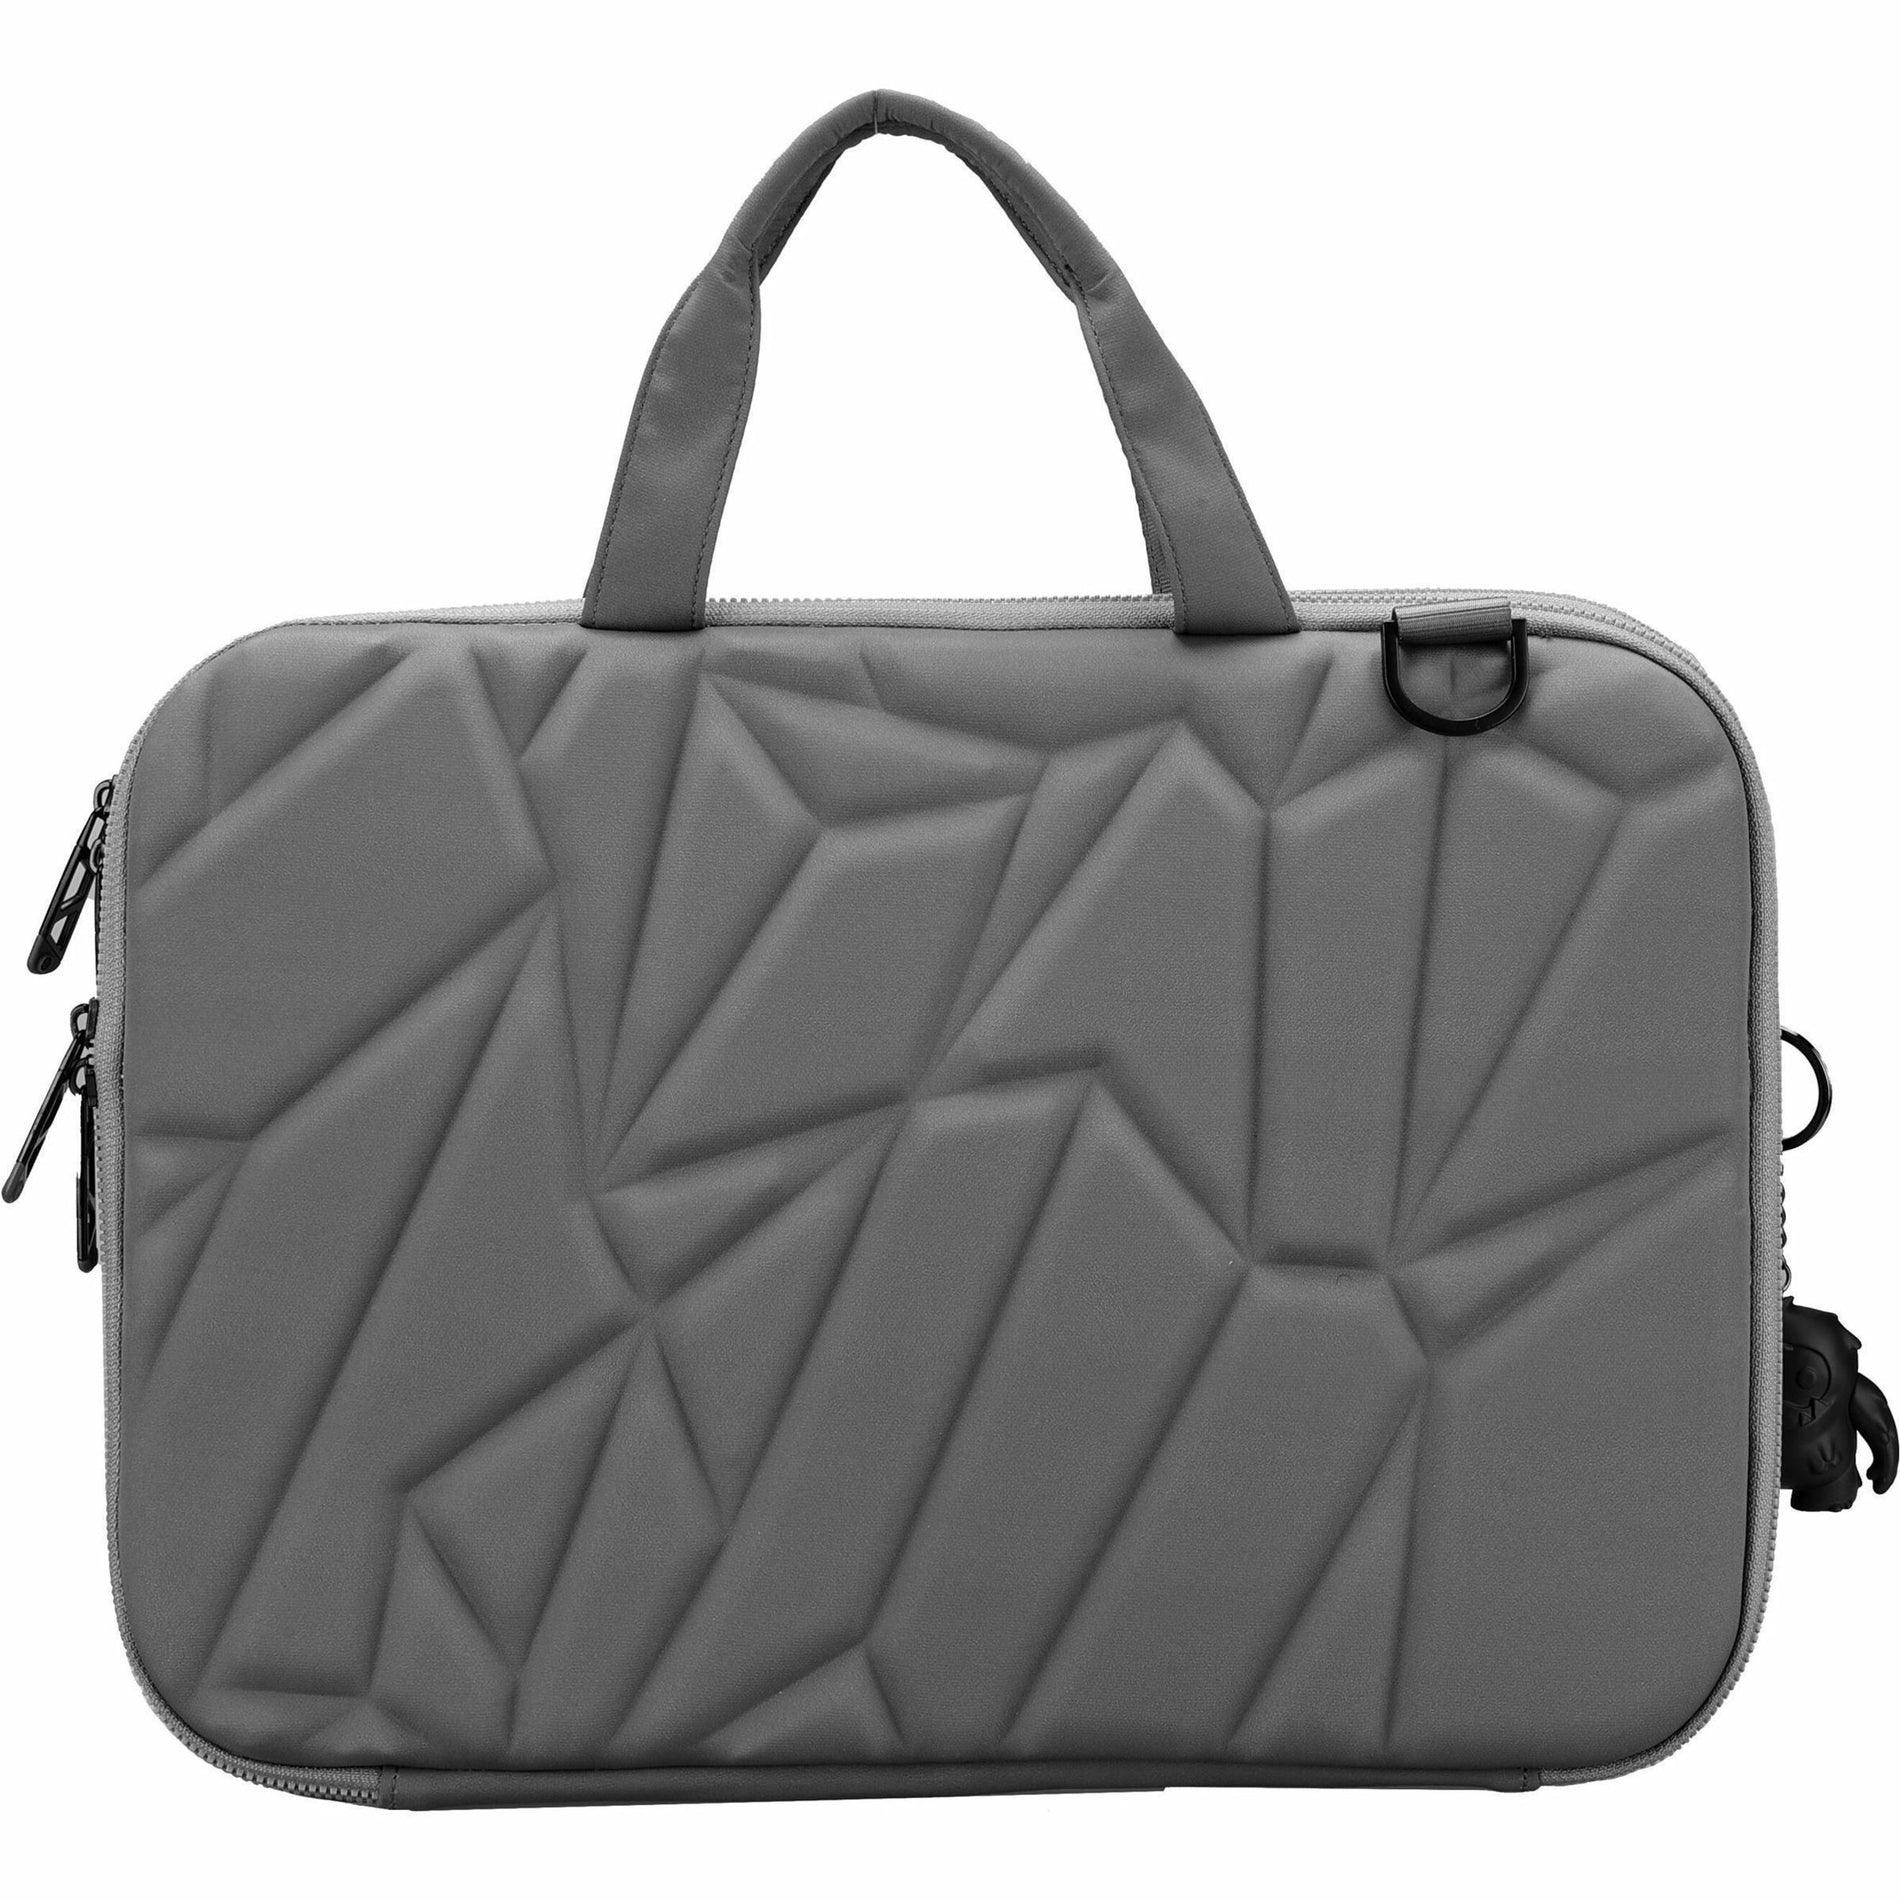 Swissdigital Design SD8522-04 Notebook Case, Sleeve for MacBook Pro, Gray